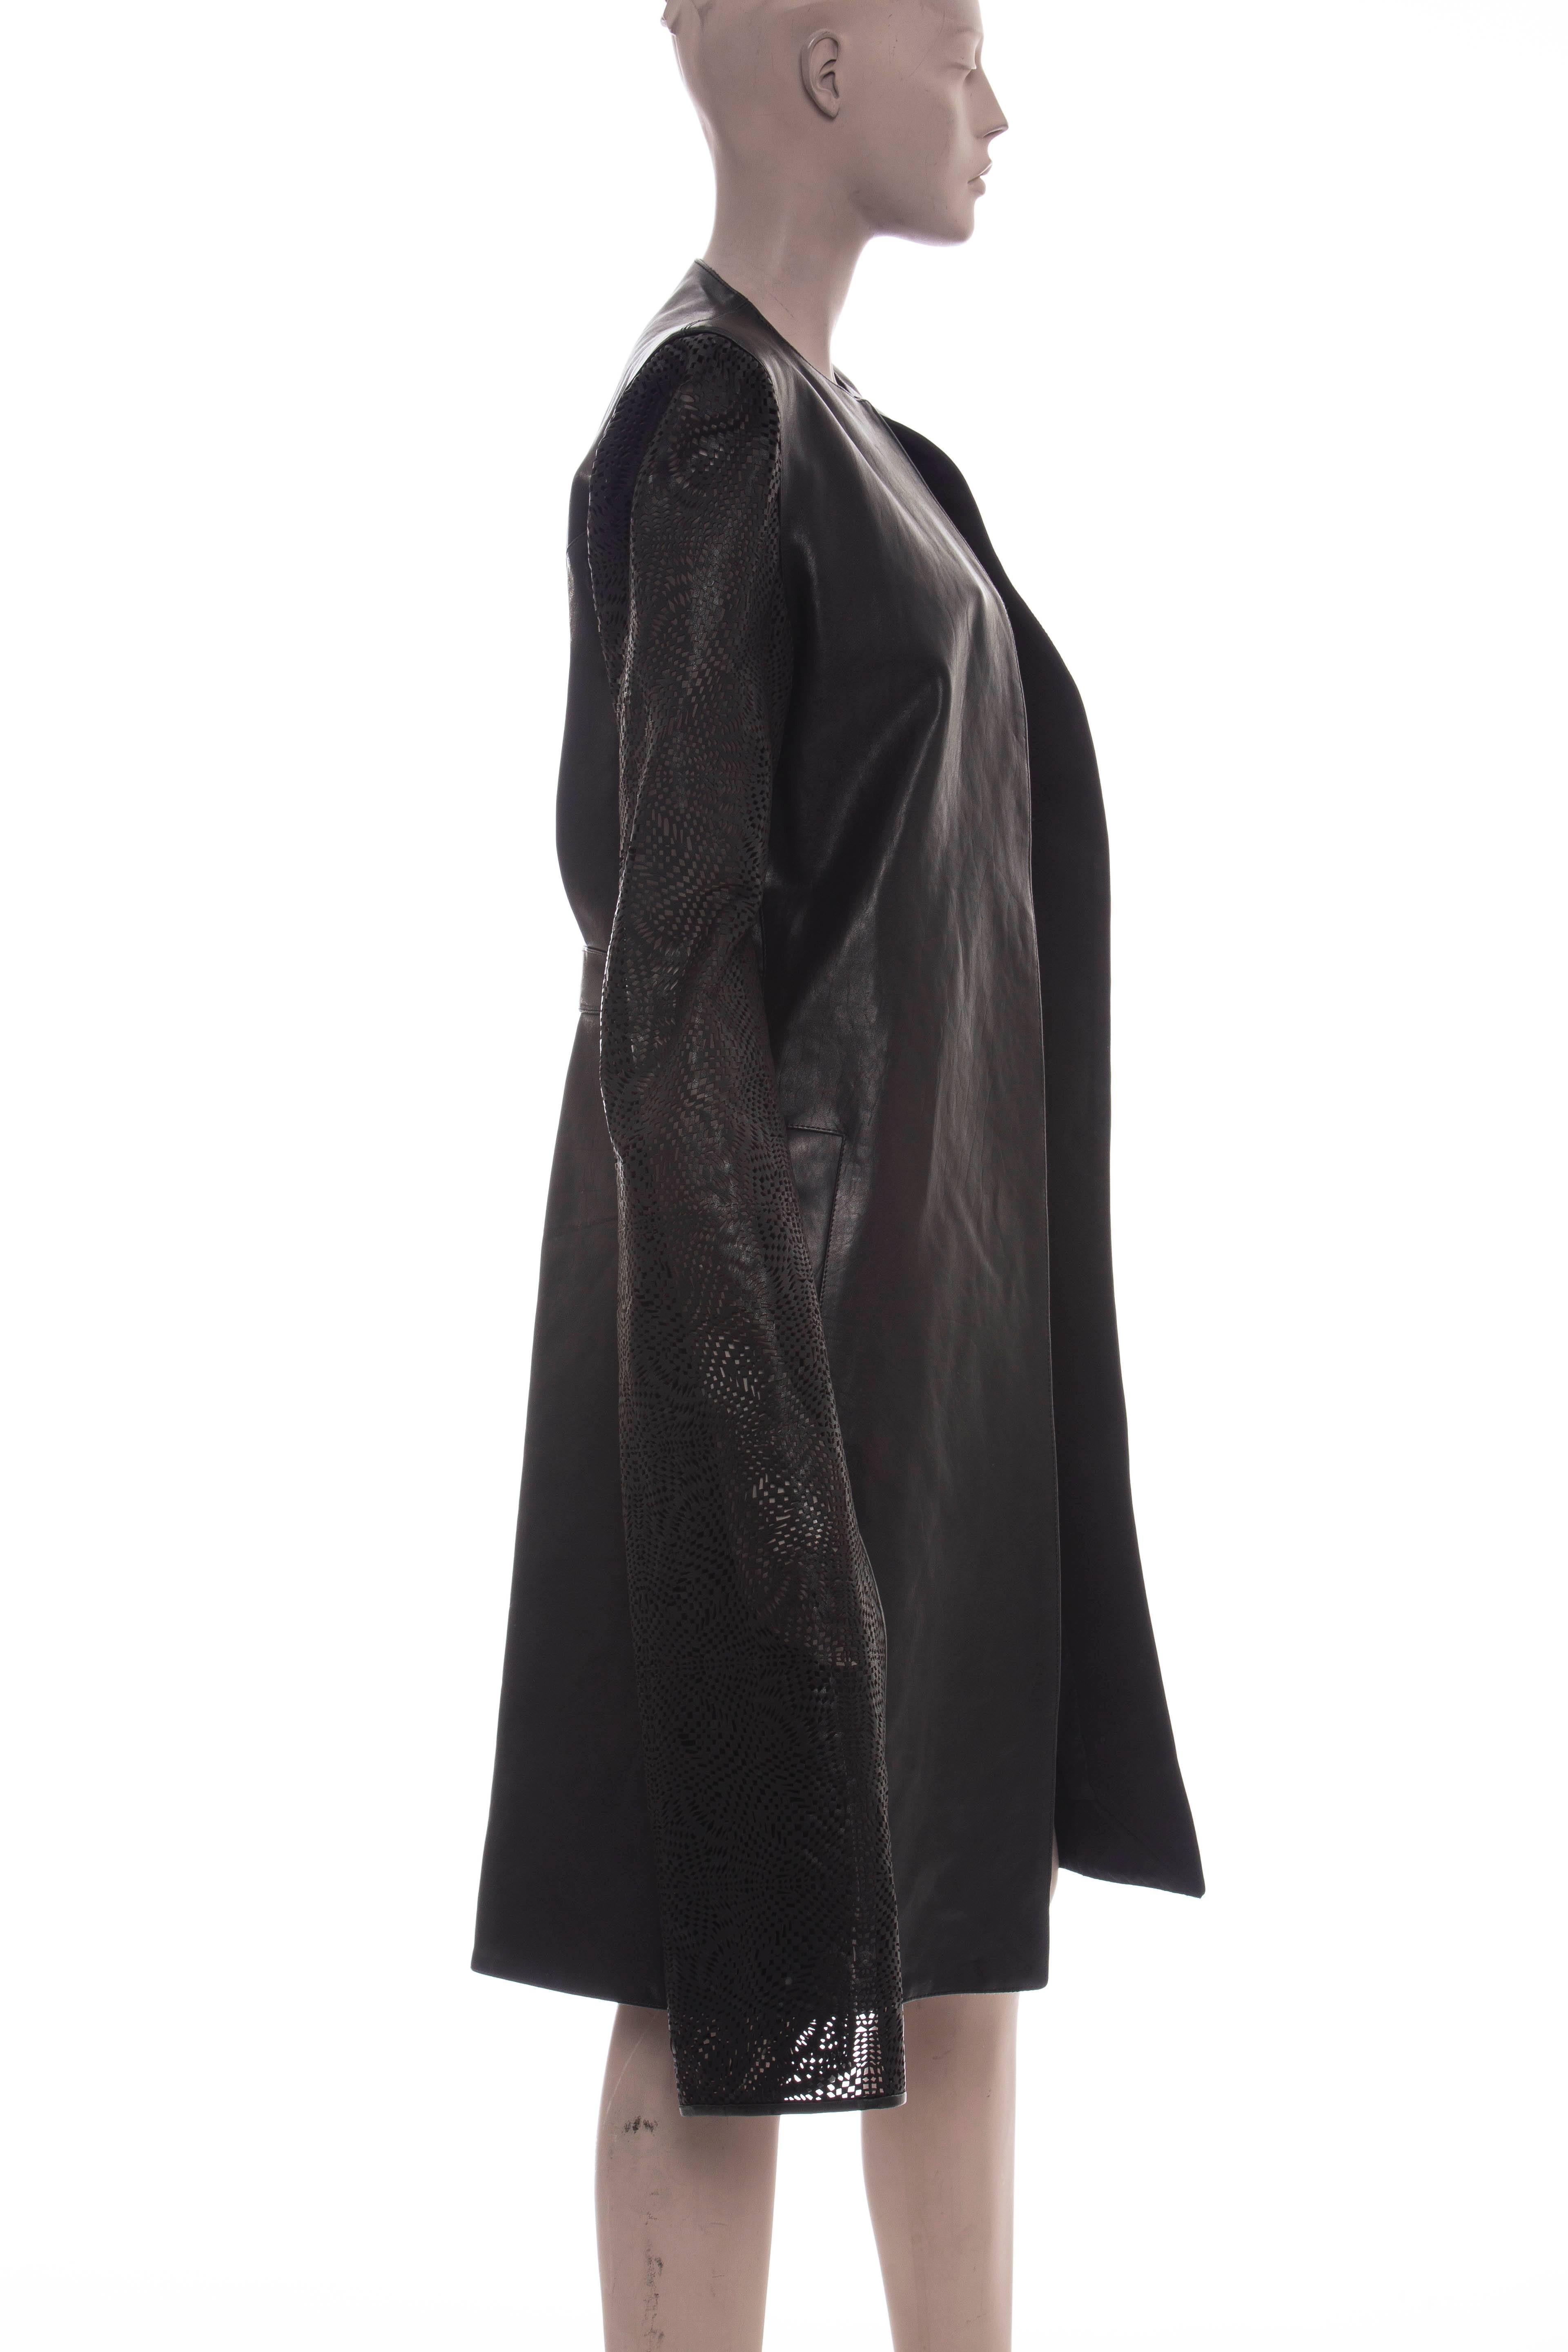 Gareth Pugh Black Leather Coat With Laser Cut Sleeves, Spring - Summer 2013 2